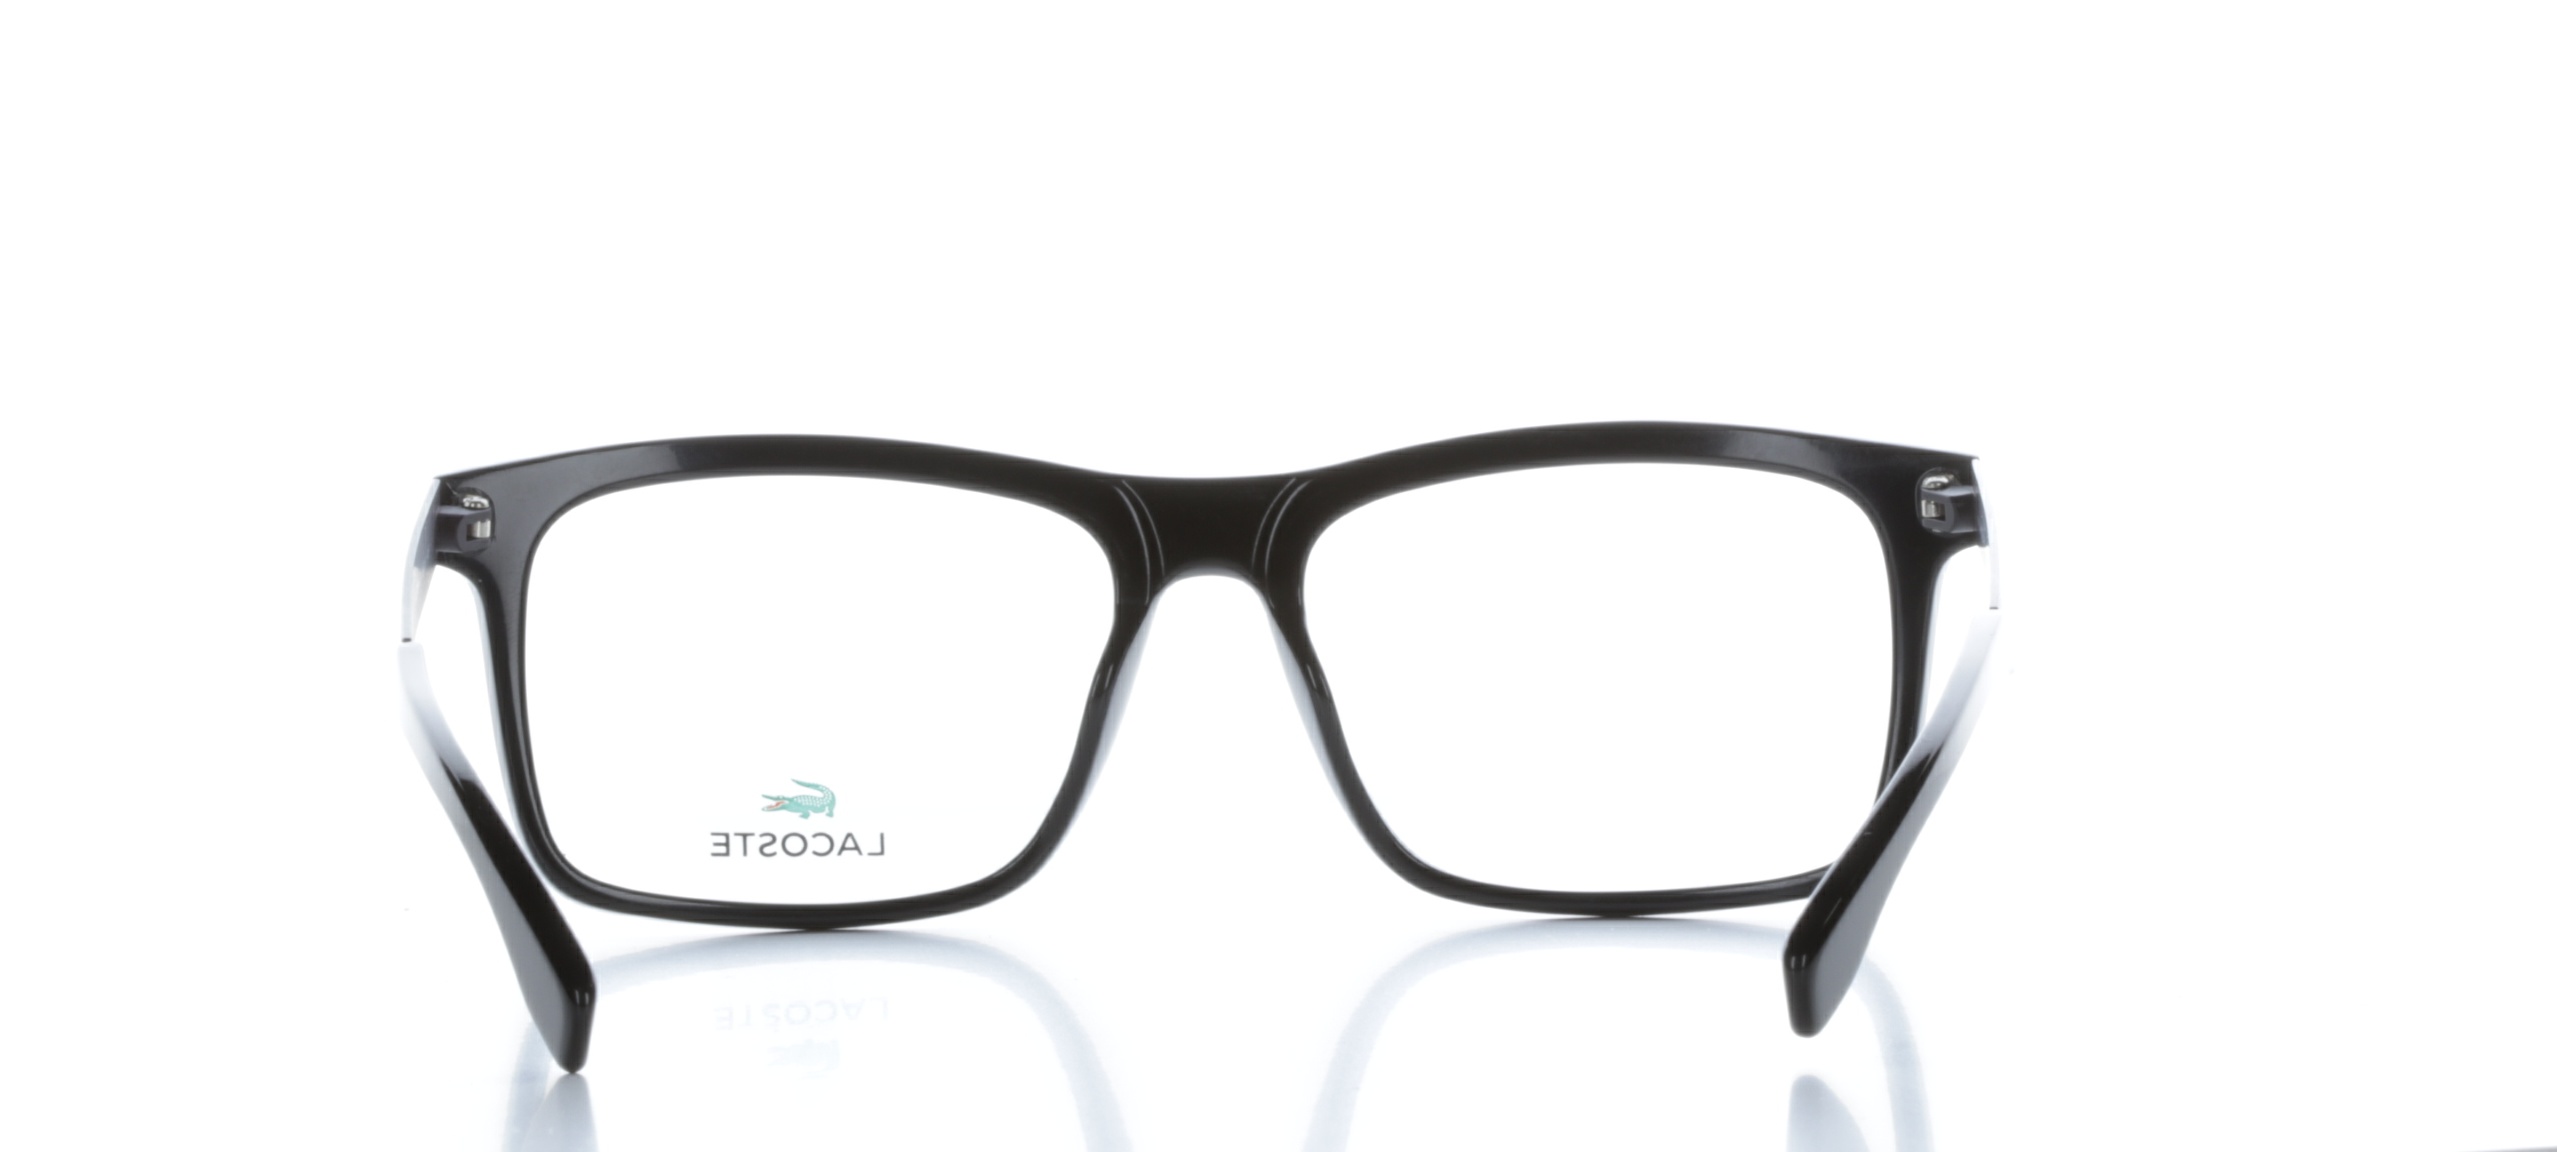 Rama ochelari Lacoste